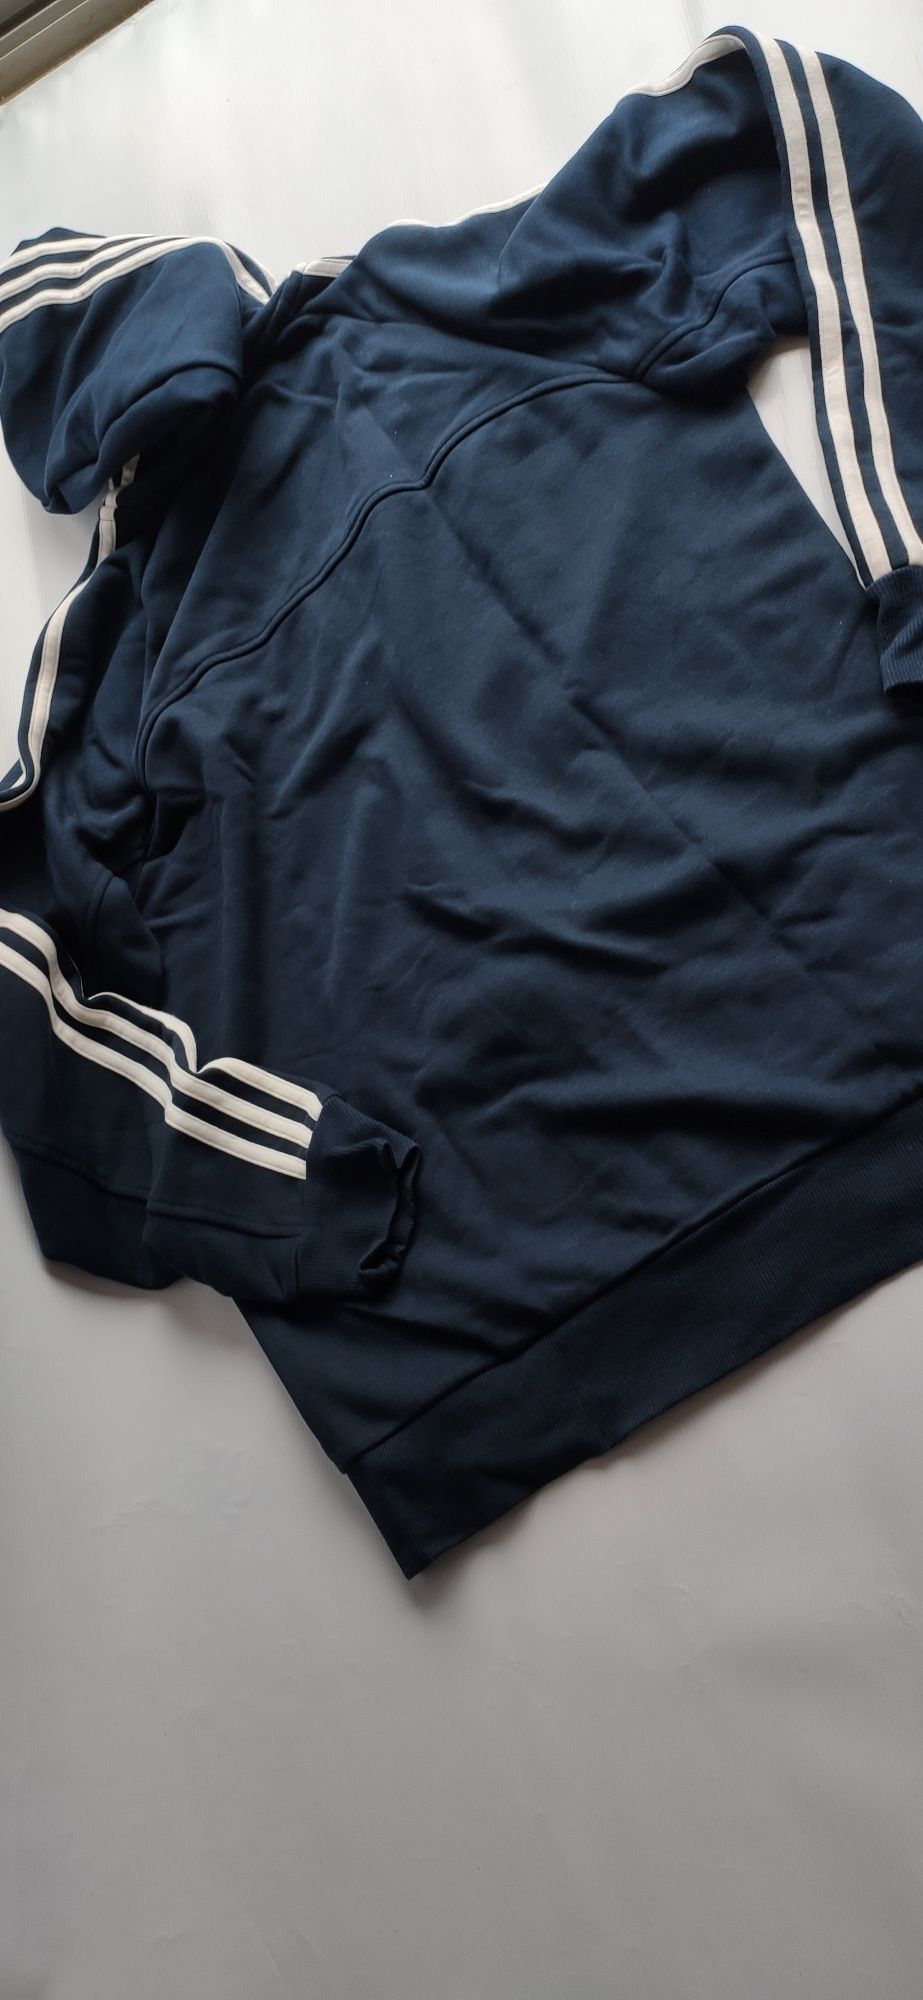 Adidas Performance Essentials ClimaLite Cotton stripes hoodie tamanho